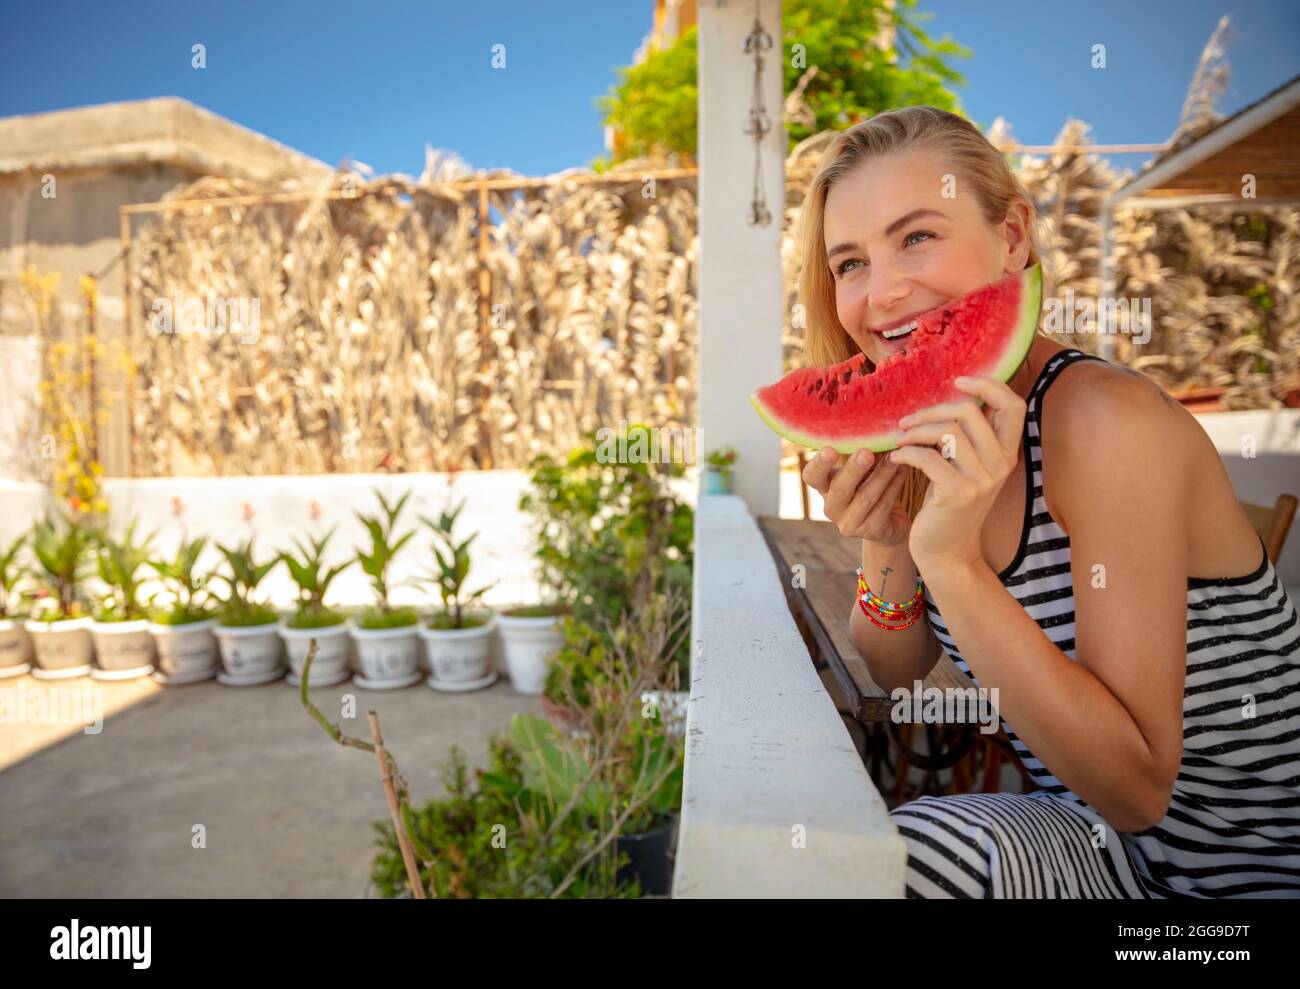 Pretty Girl with Pleasure Eating Ripe Fresh Juicy Watermelon. Enjoying Tasty Sweet Summertime Fruits. Enjoying Beach House. Happy Summer Vacation. Stock Photo